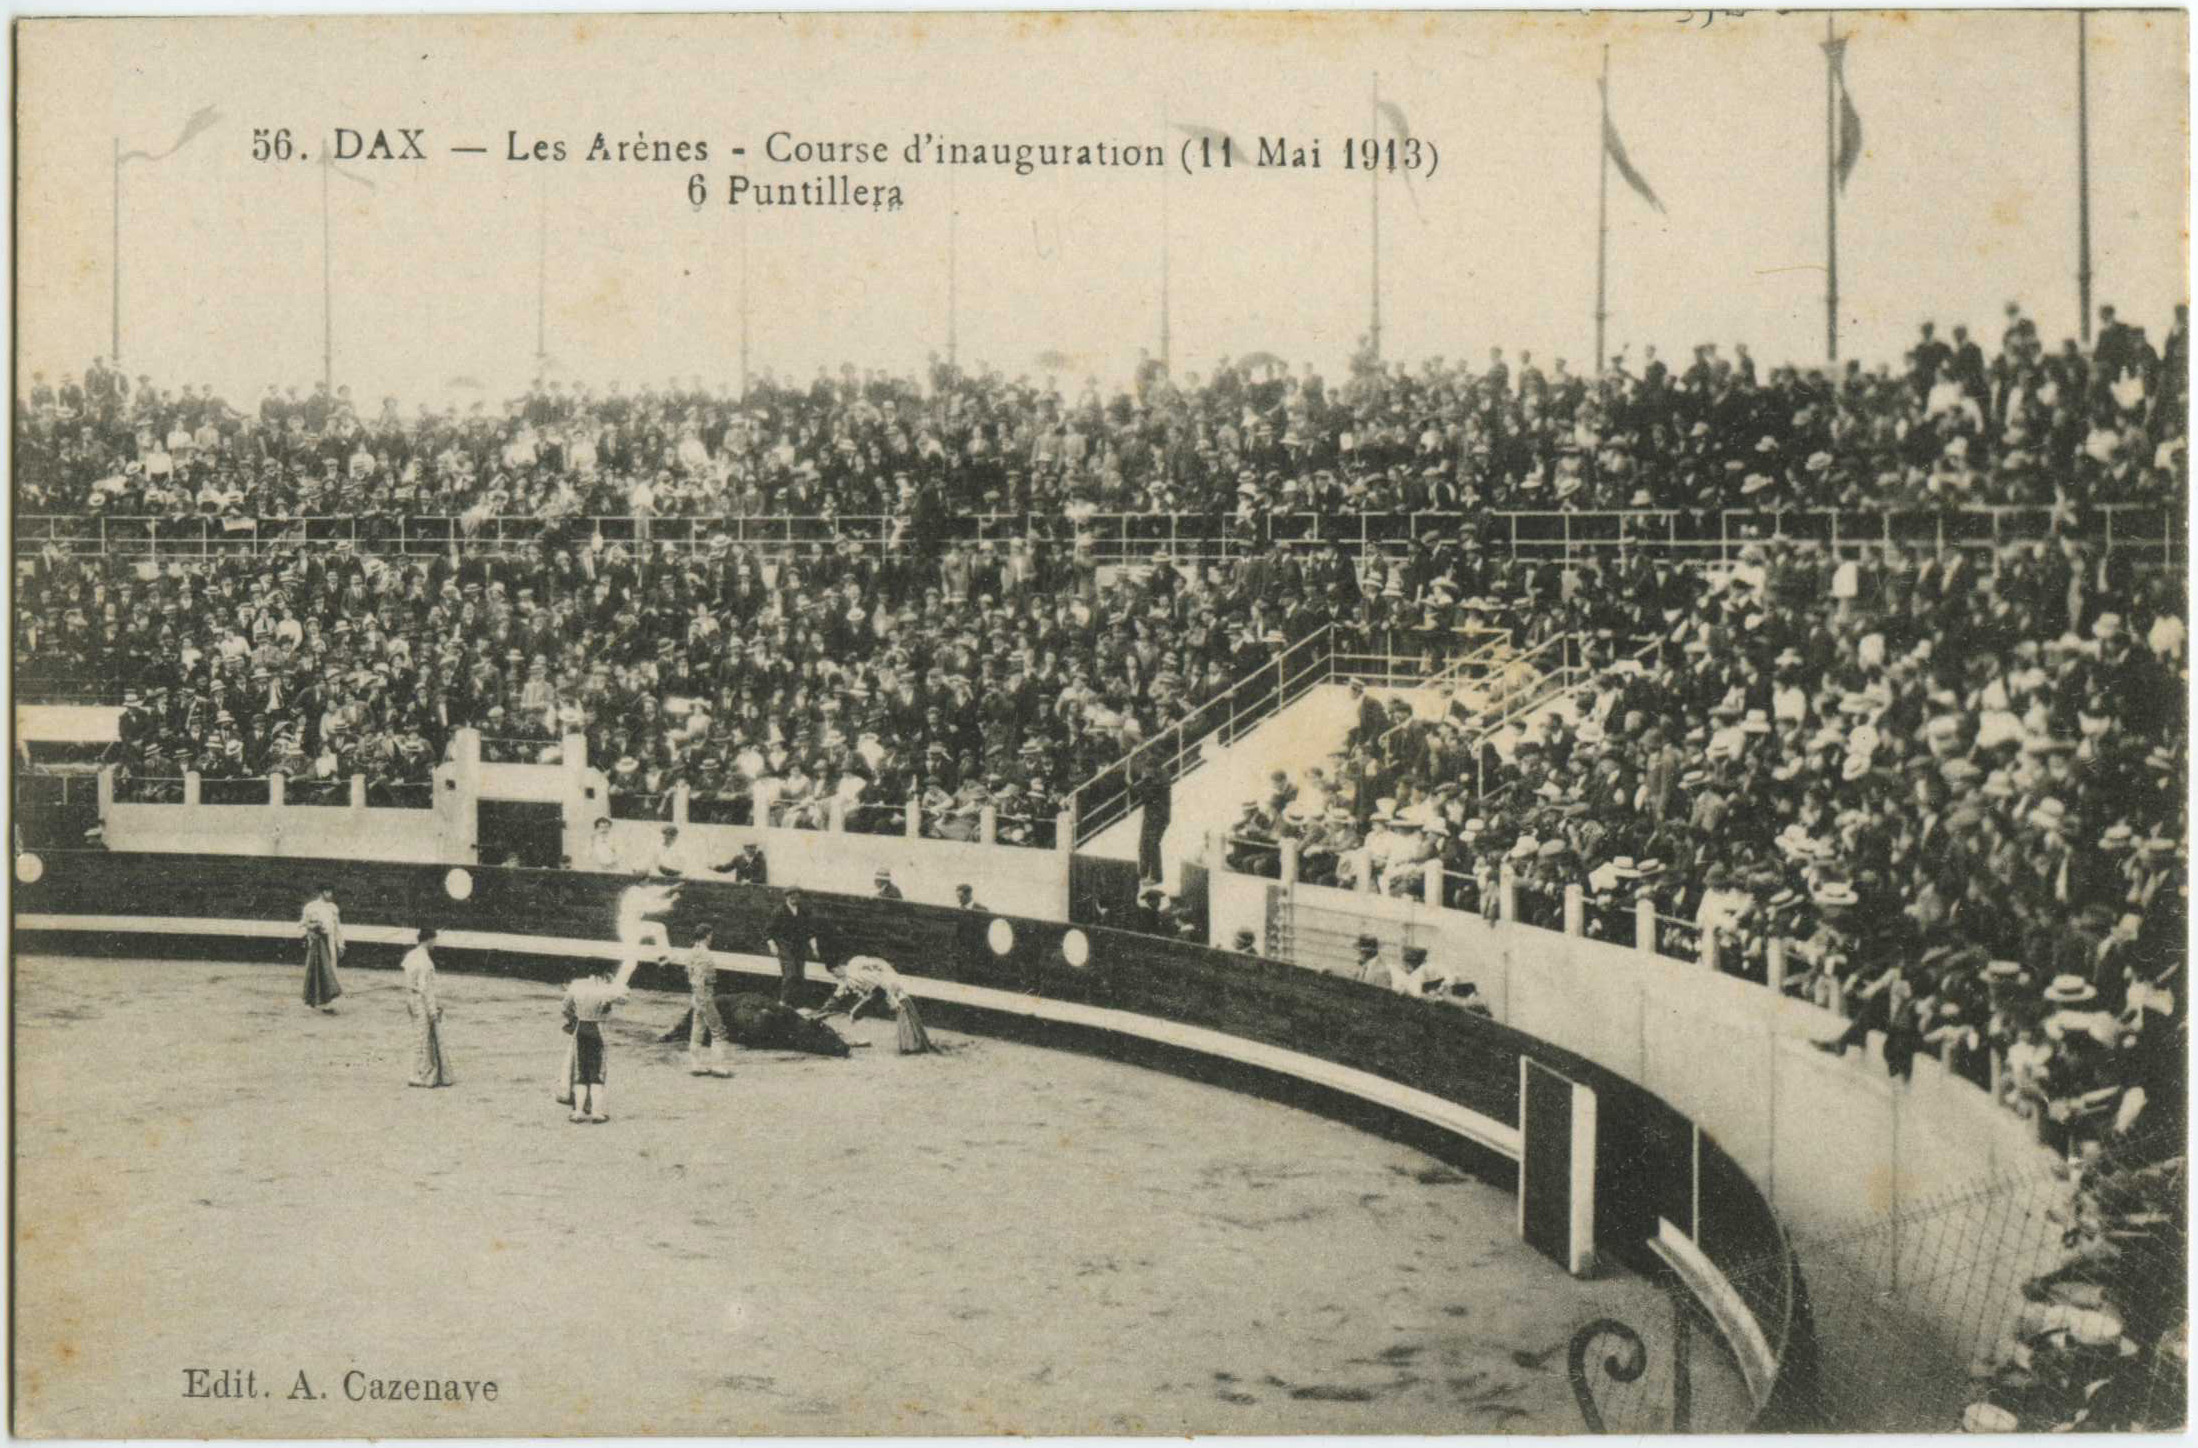 Dax - Les Arènes - Course d'inauguration (11 mai 1913) - Puntillera